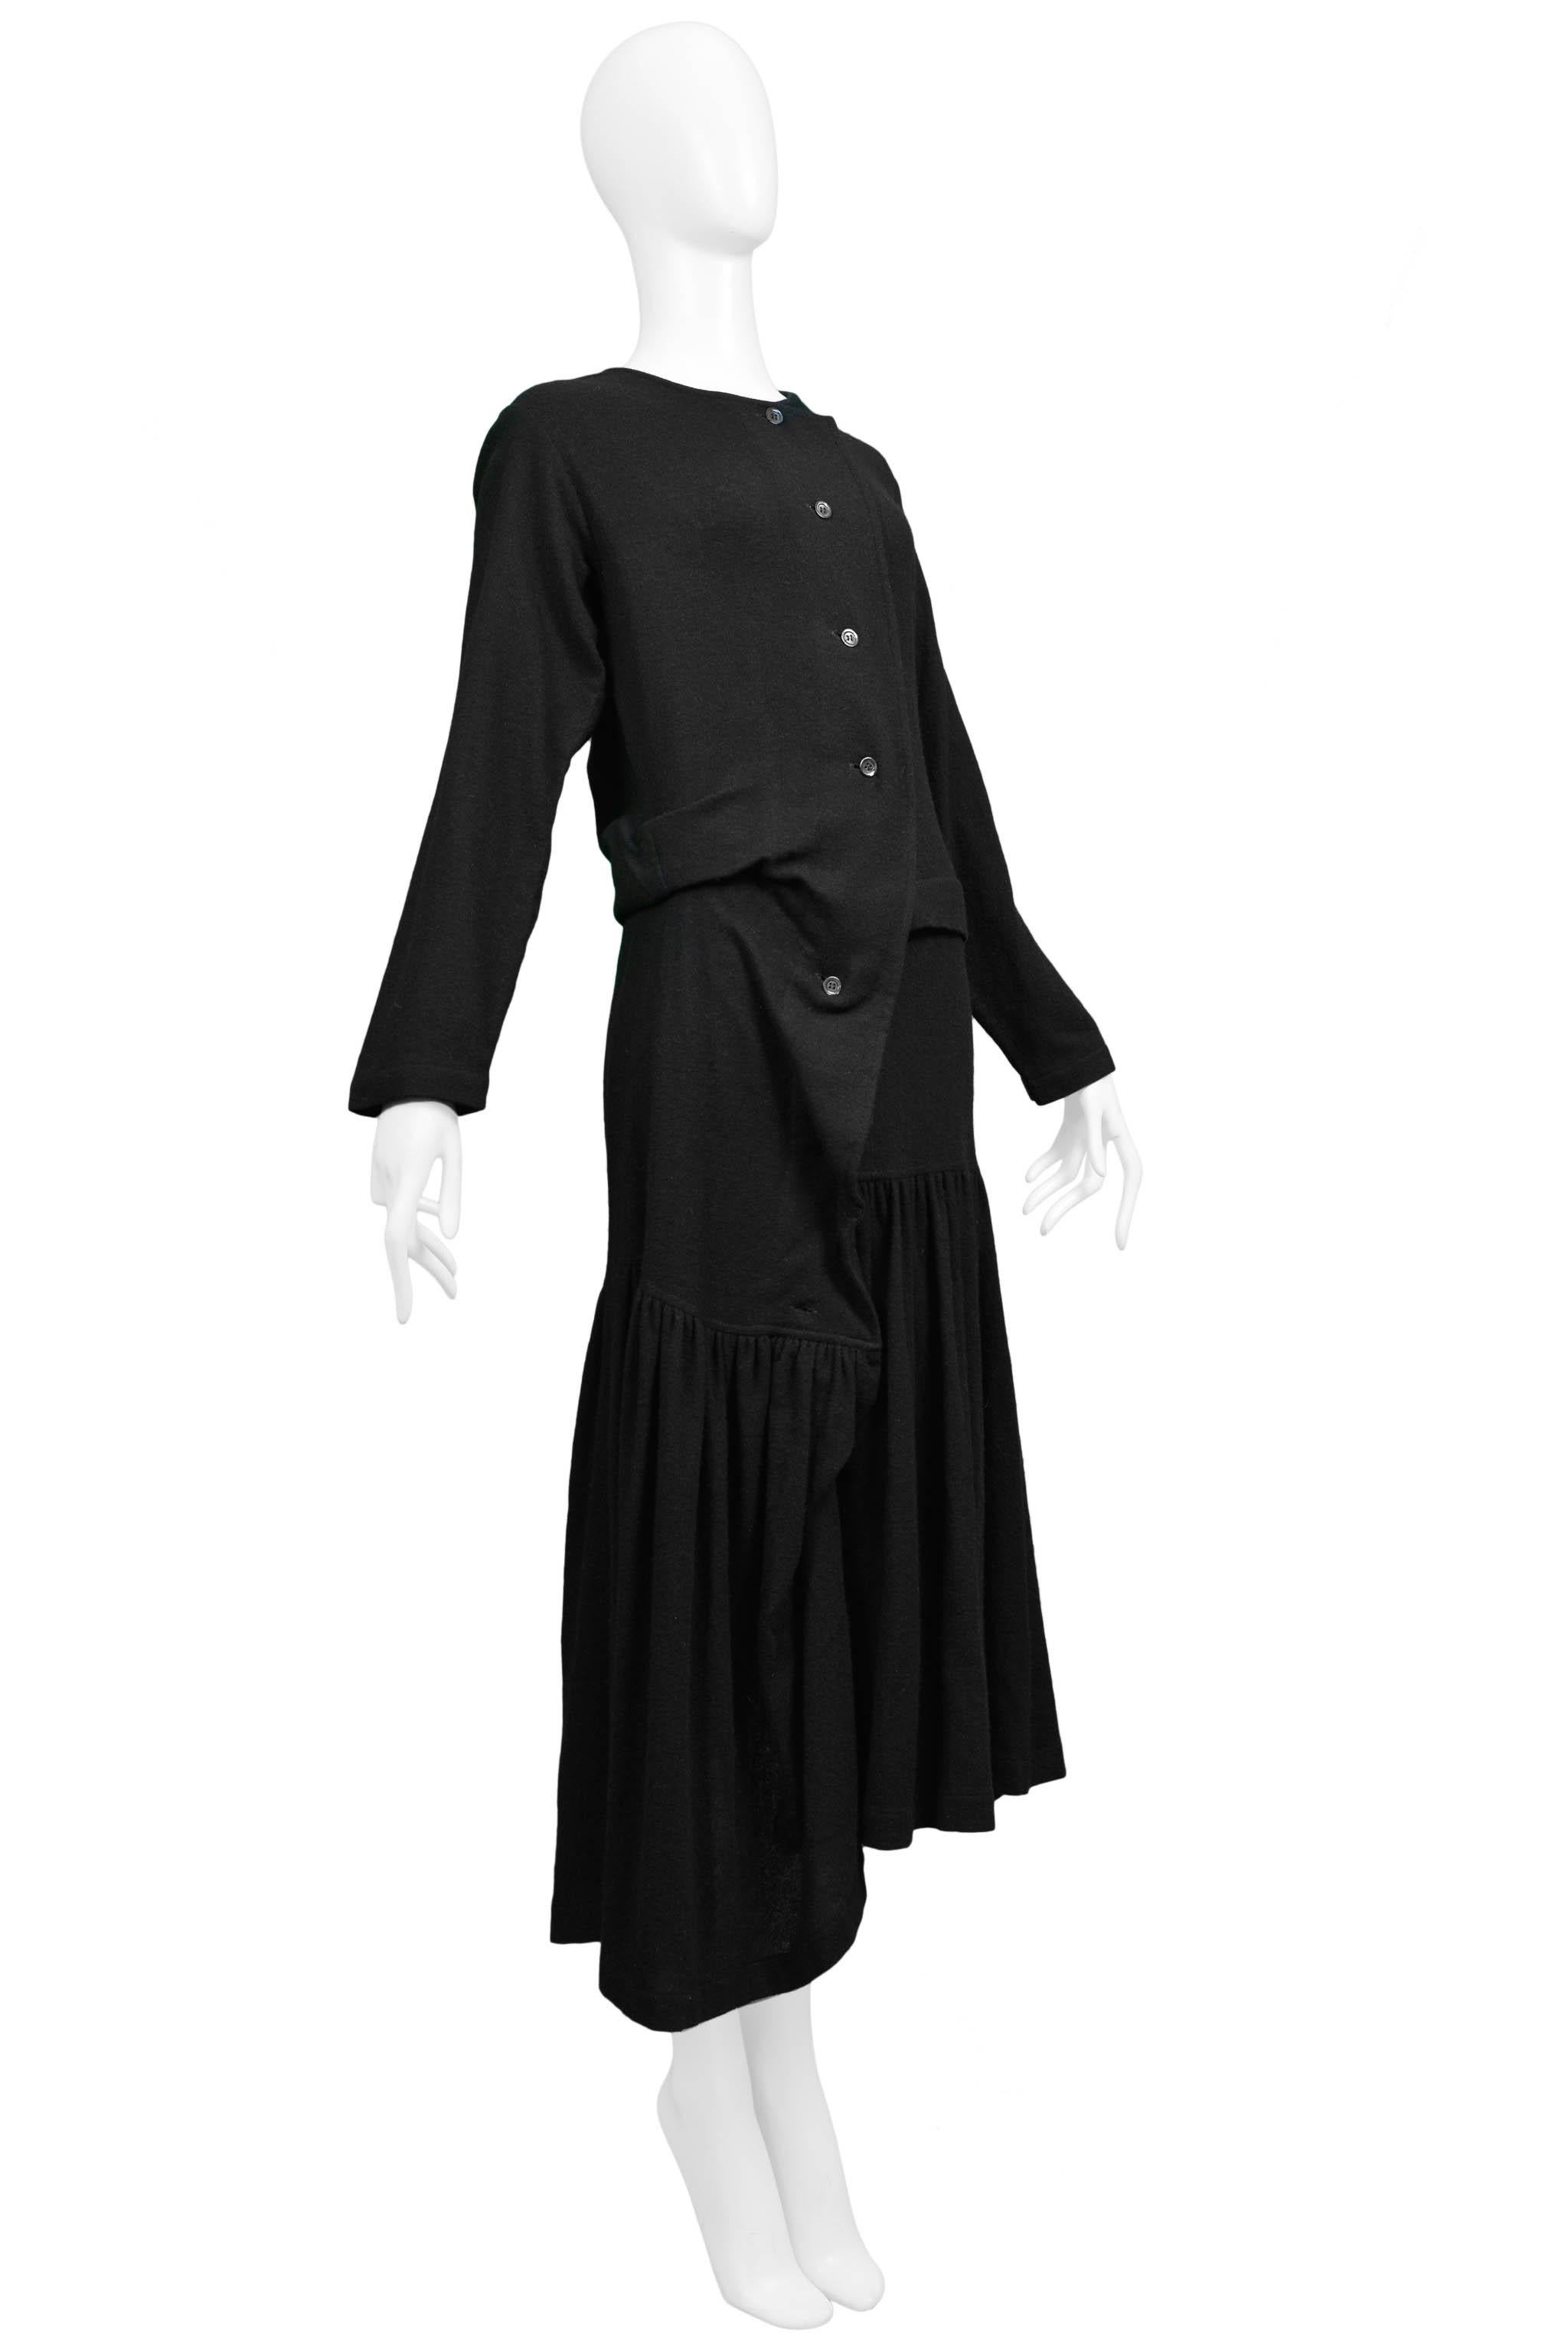 Women's Comme Des Garcons Early Black Knit Cardigan Sweater Dress